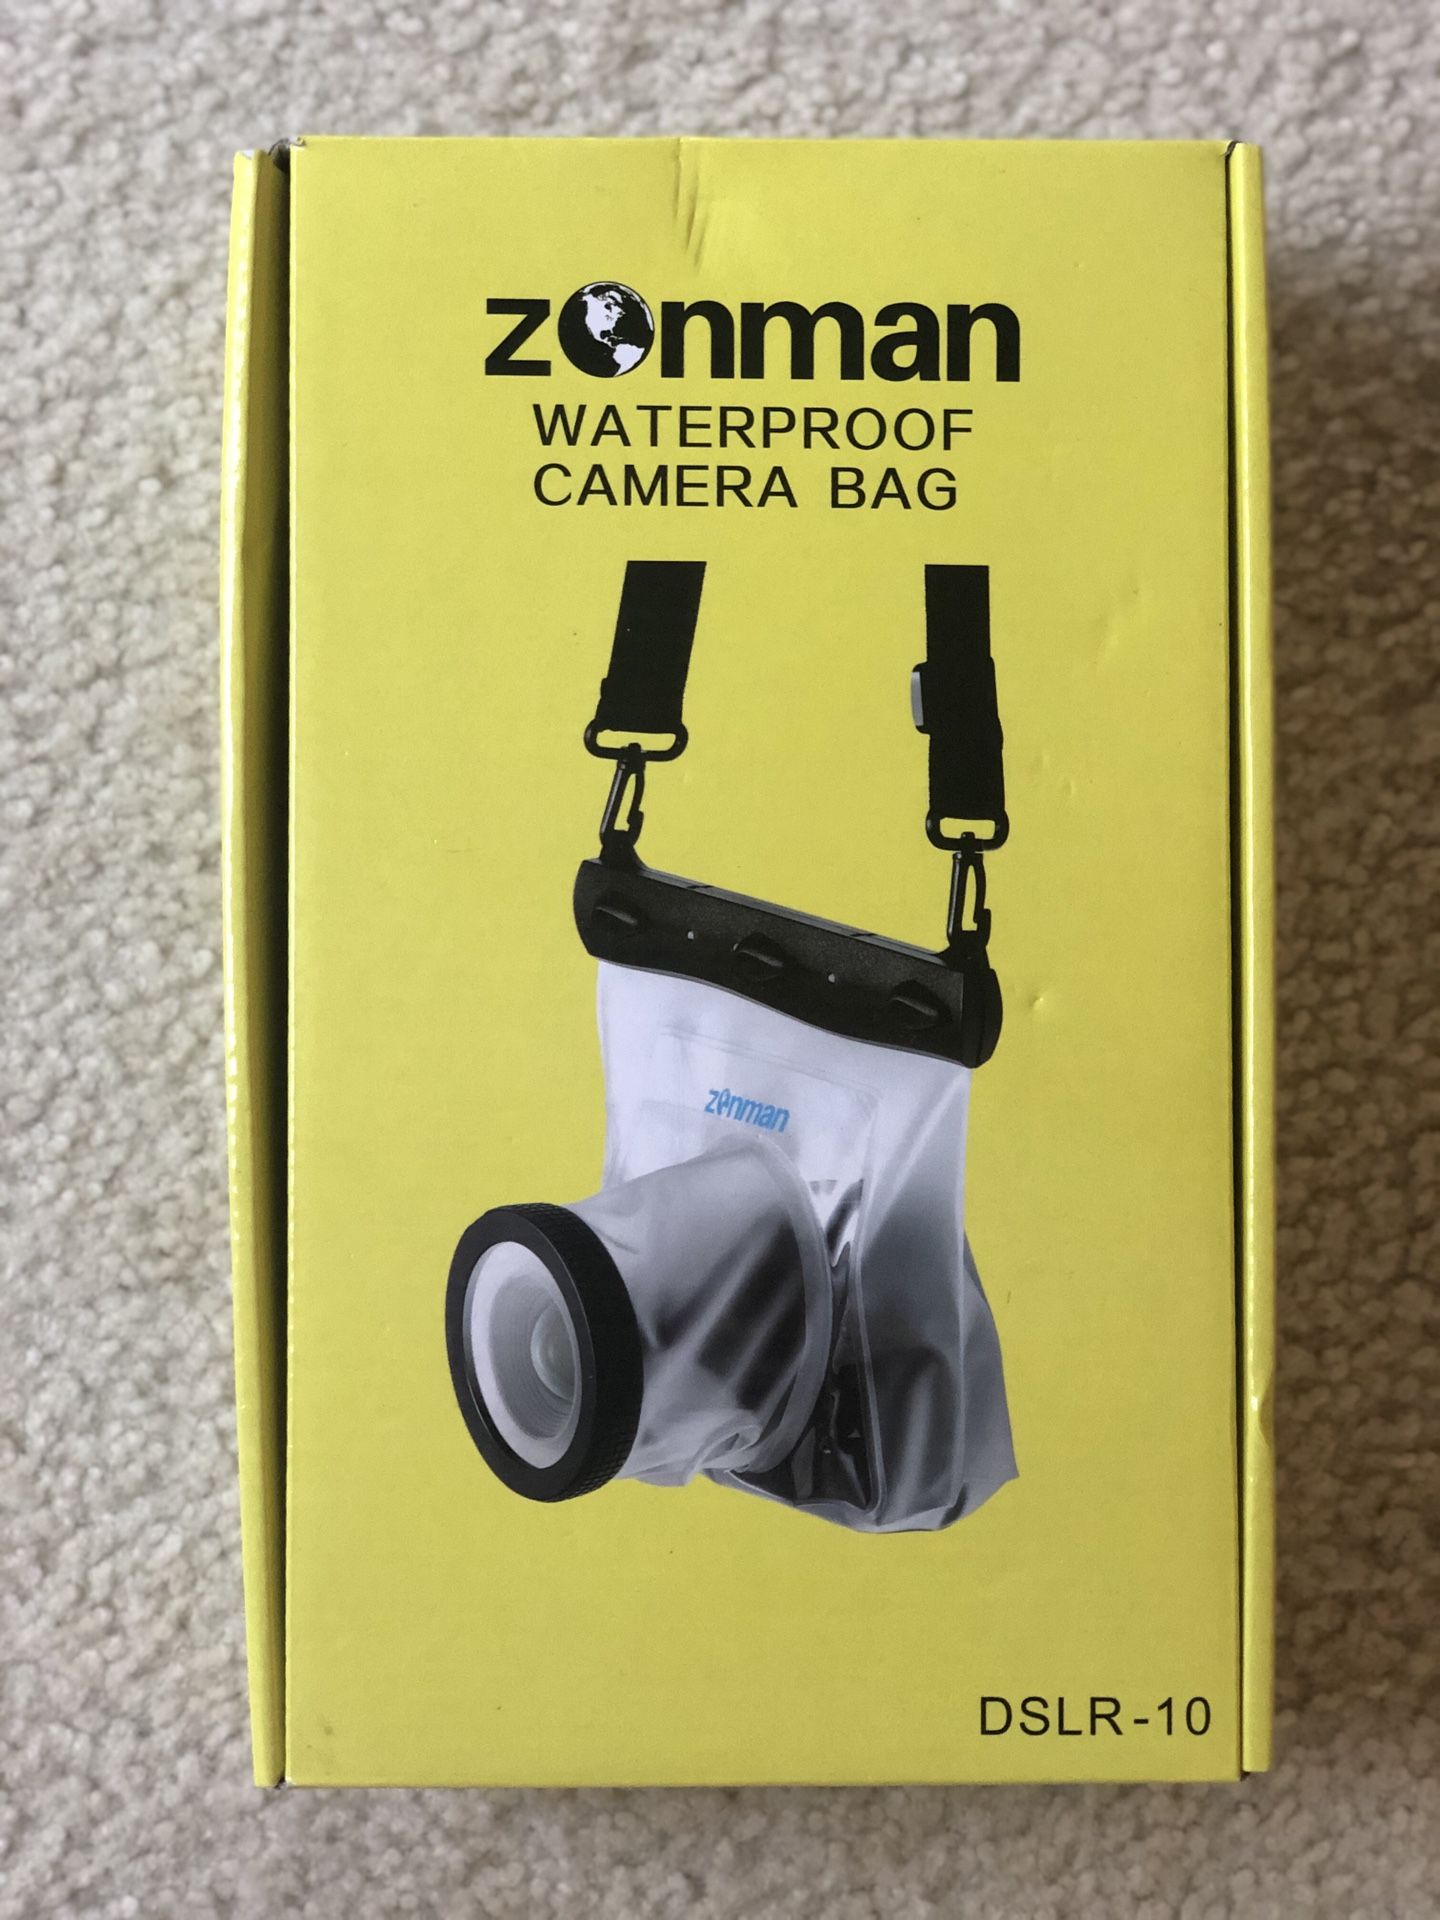 Zonman underwater camera bag